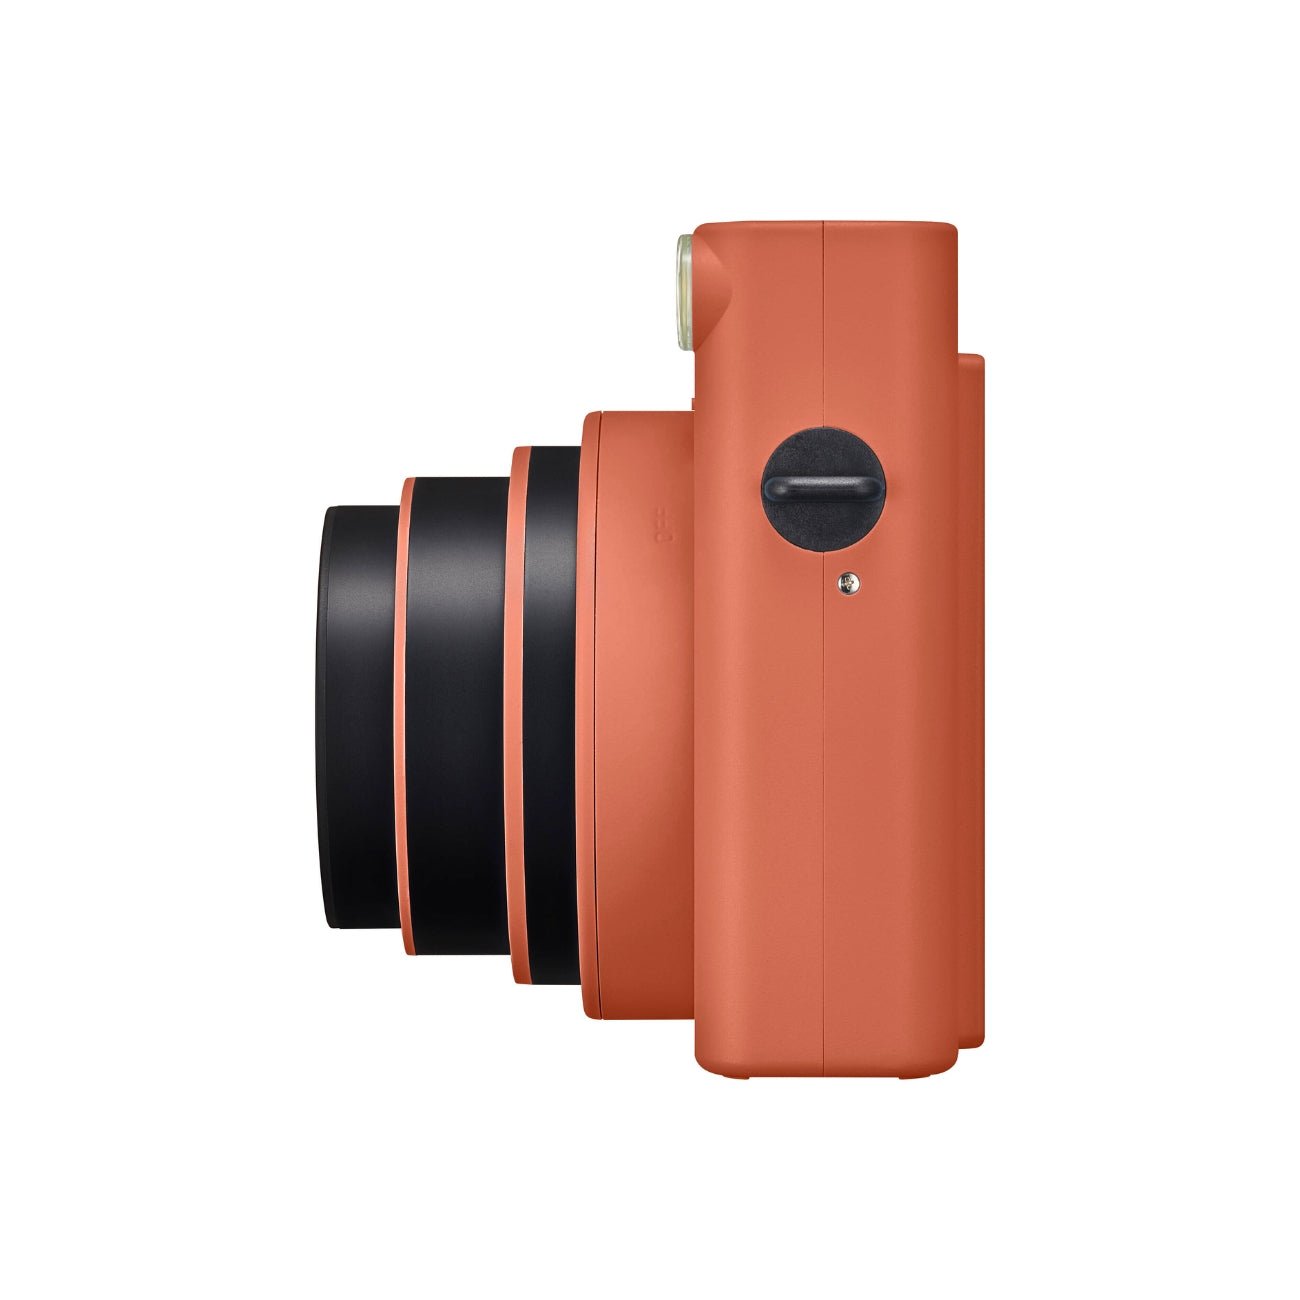 Fujifilm Instax SQUARE SQ1 Instant Film Camera Terracotta Orange Side View